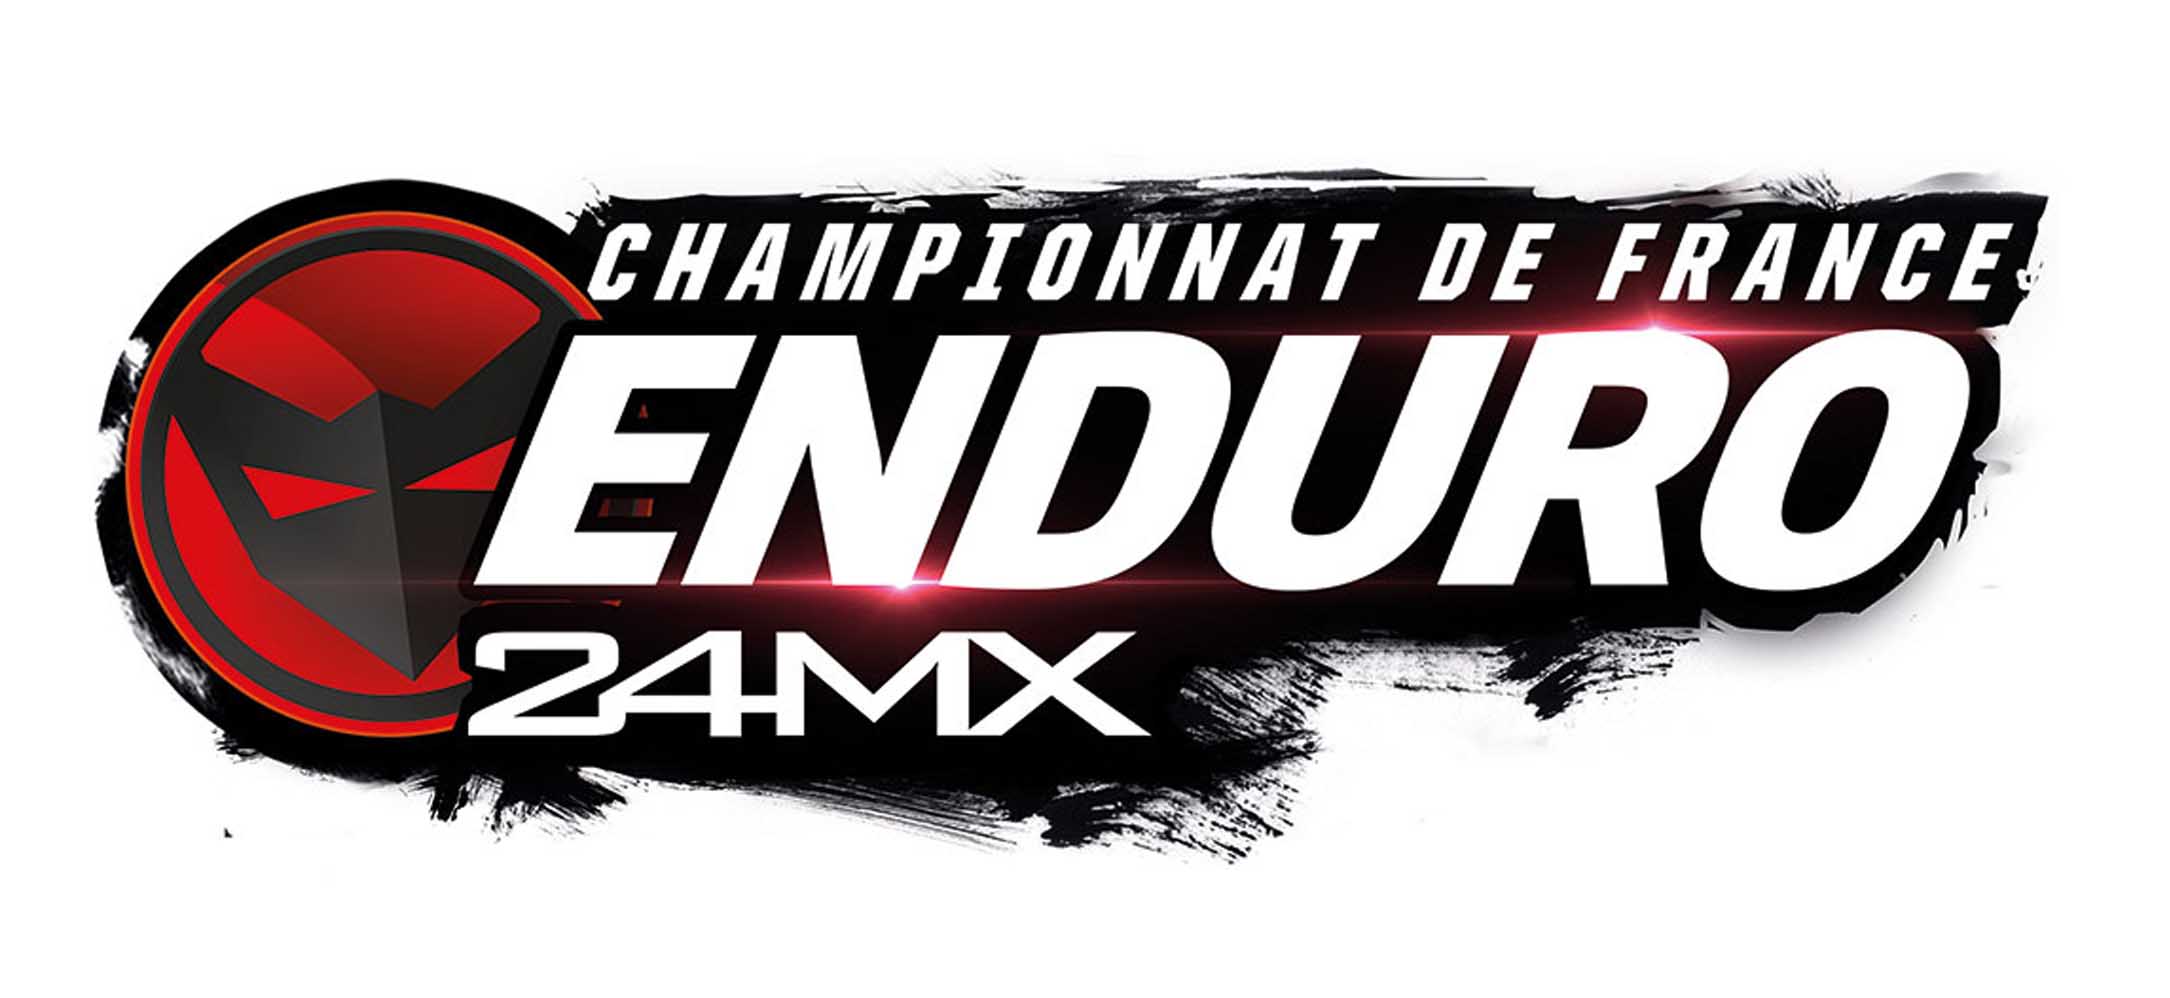 Championnat de France Enduro 24MX